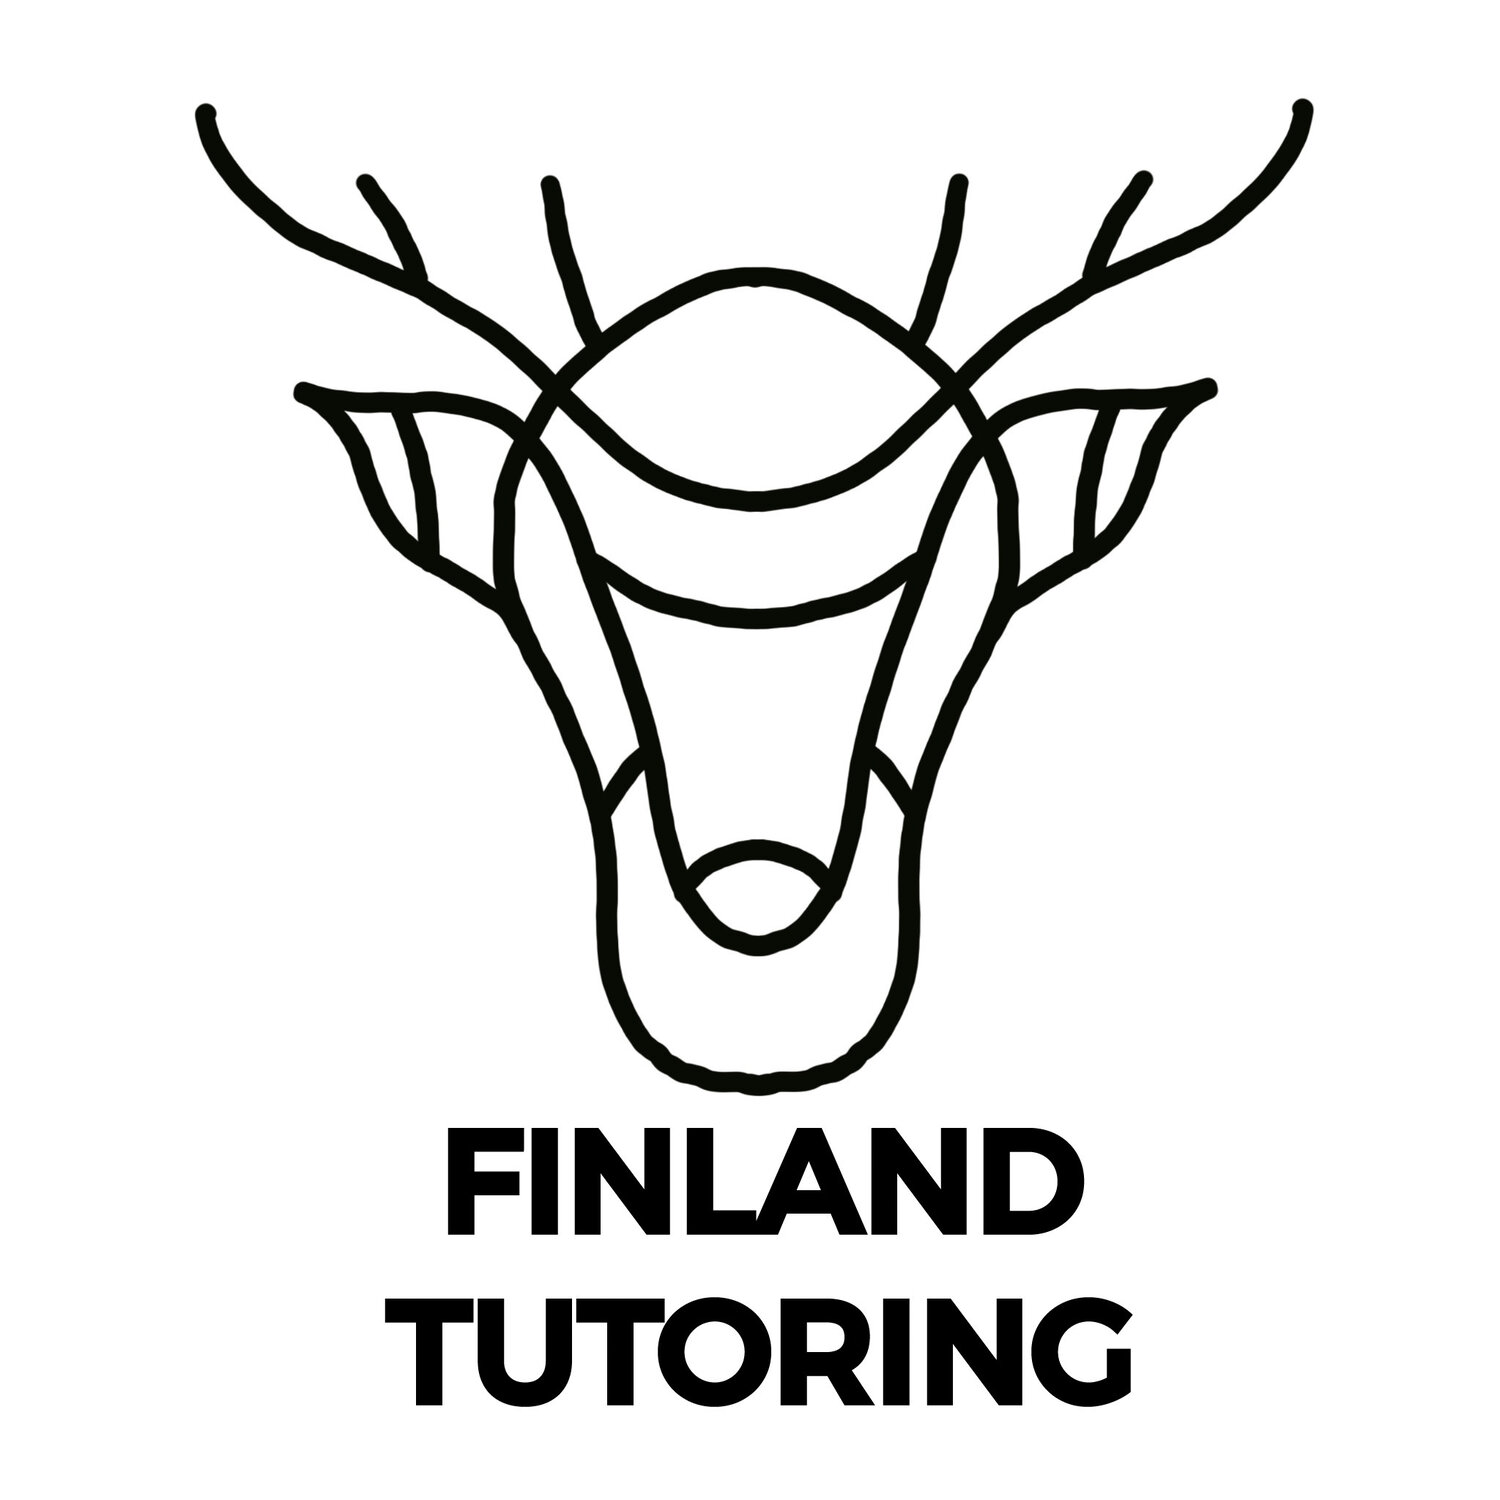 Finland Tutoring